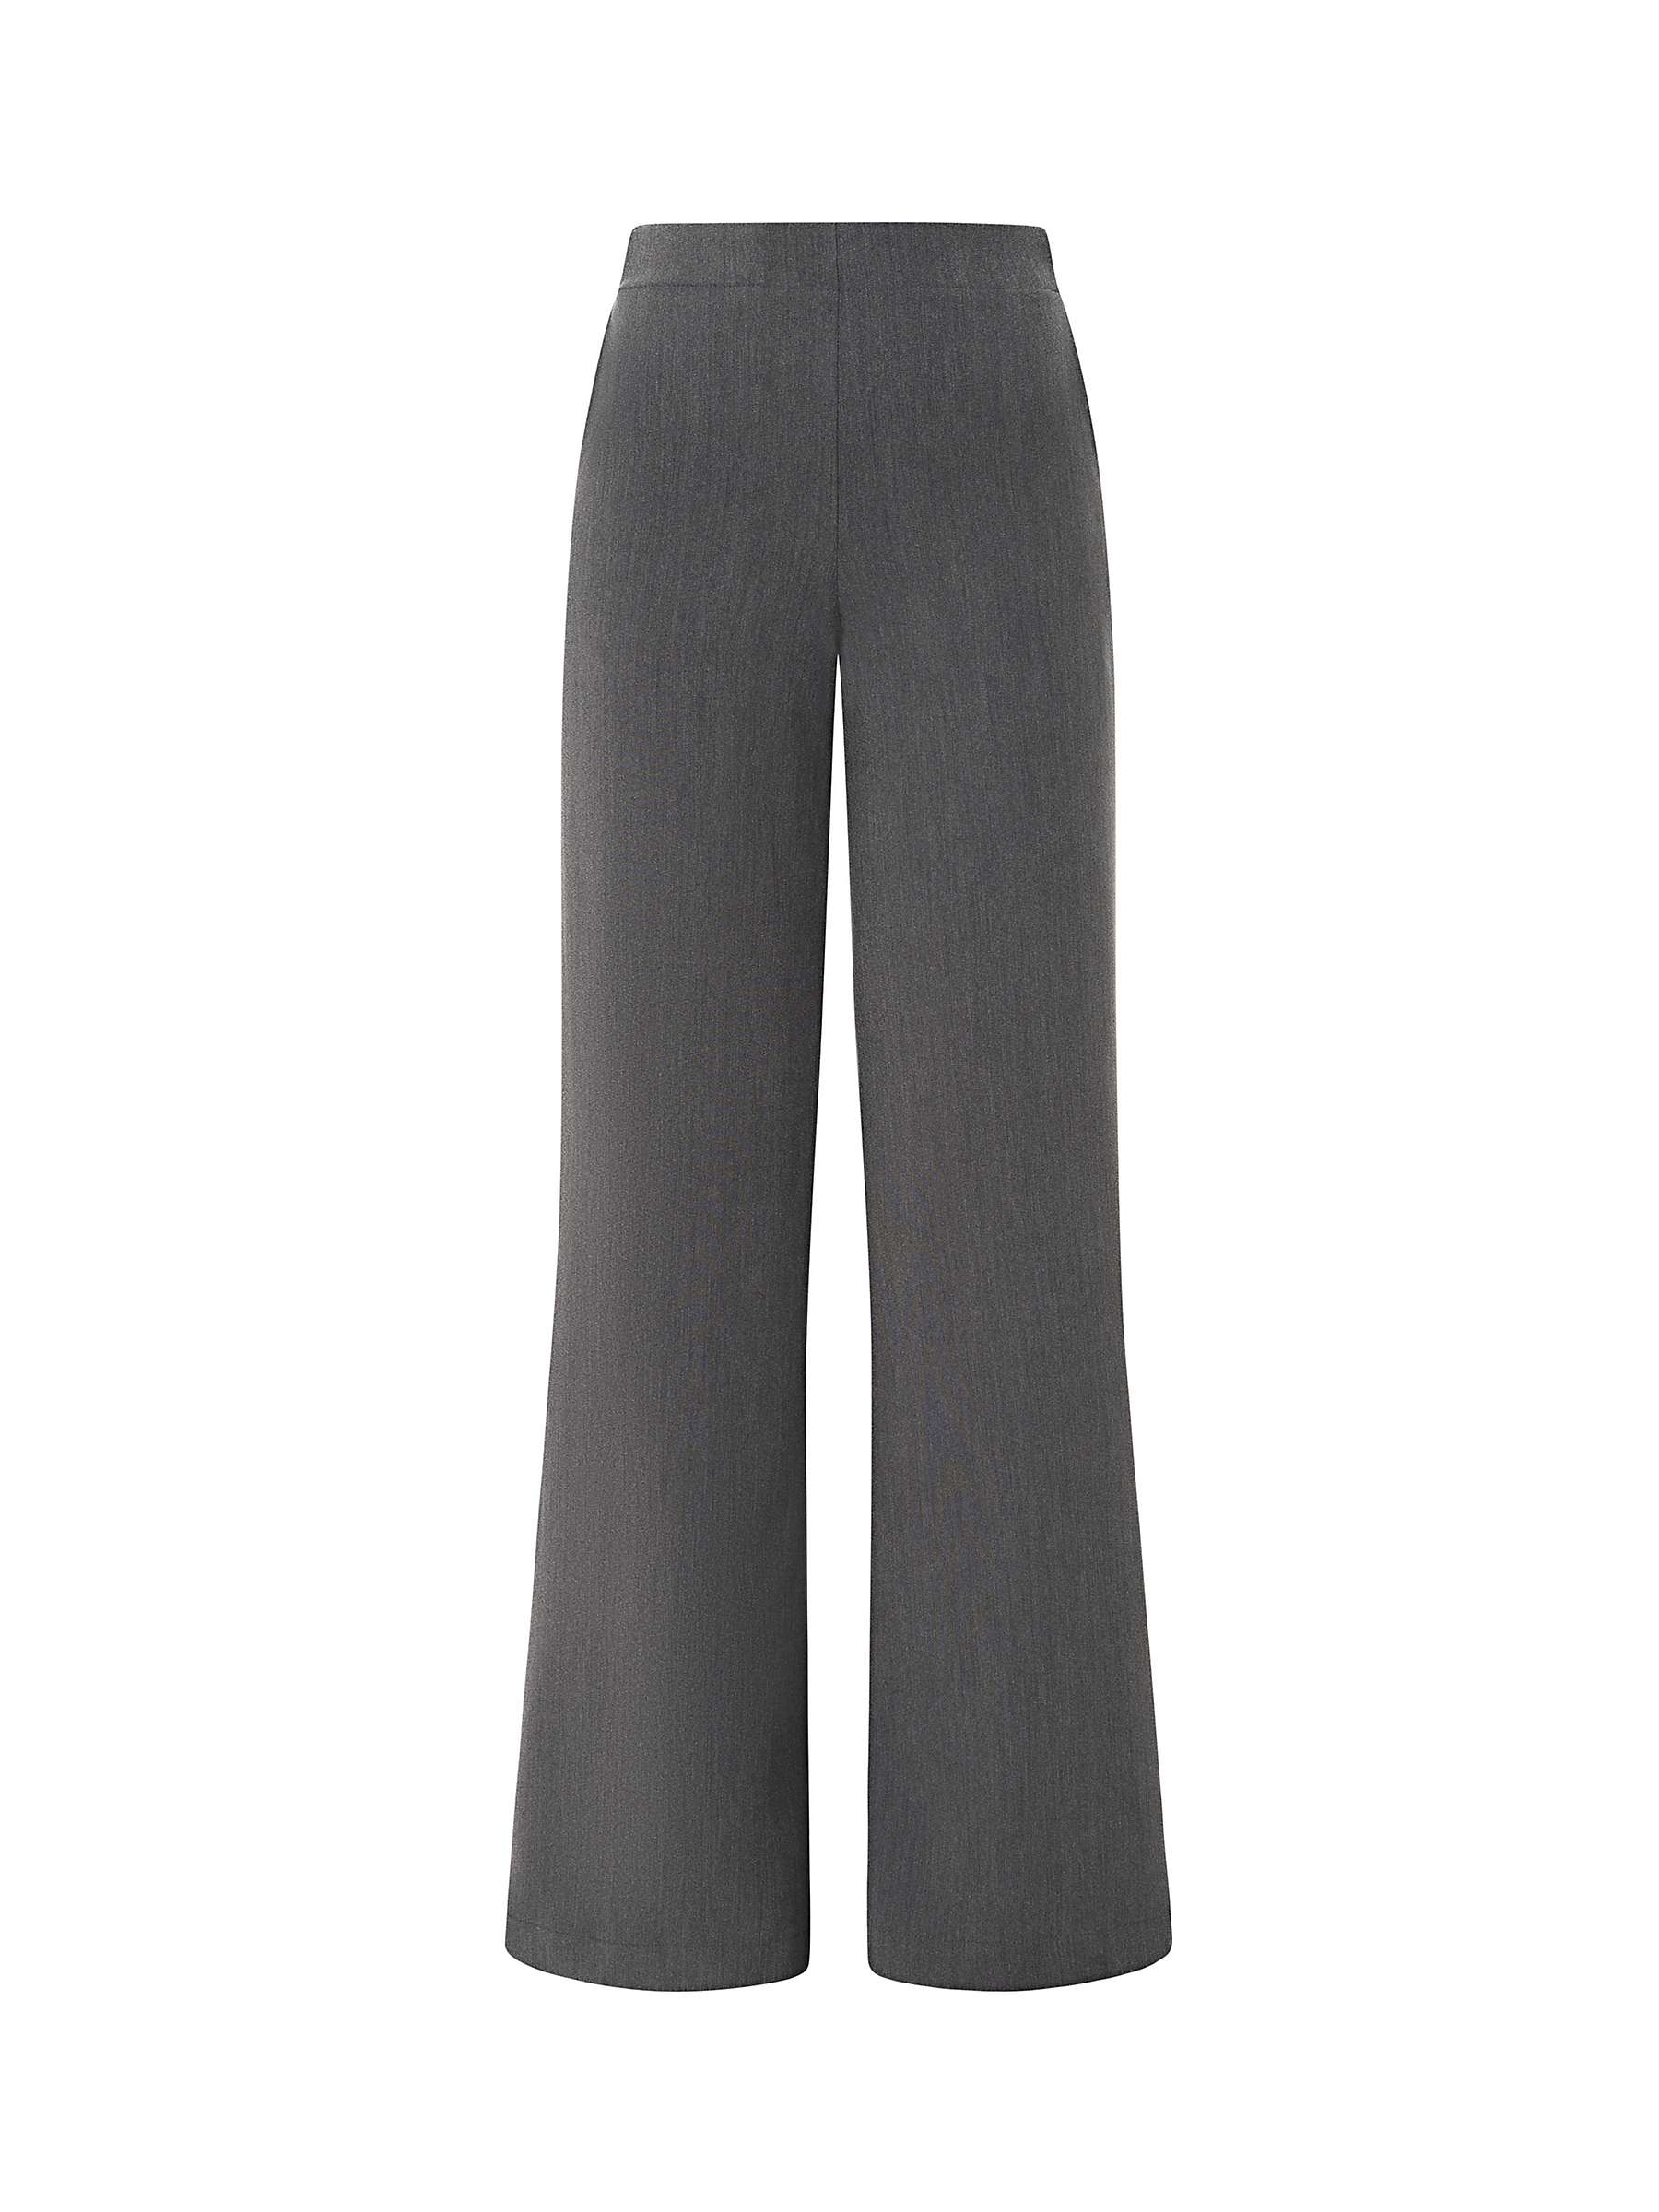 Buy HotSquash Wide Leg Trousers, Grey Online at johnlewis.com